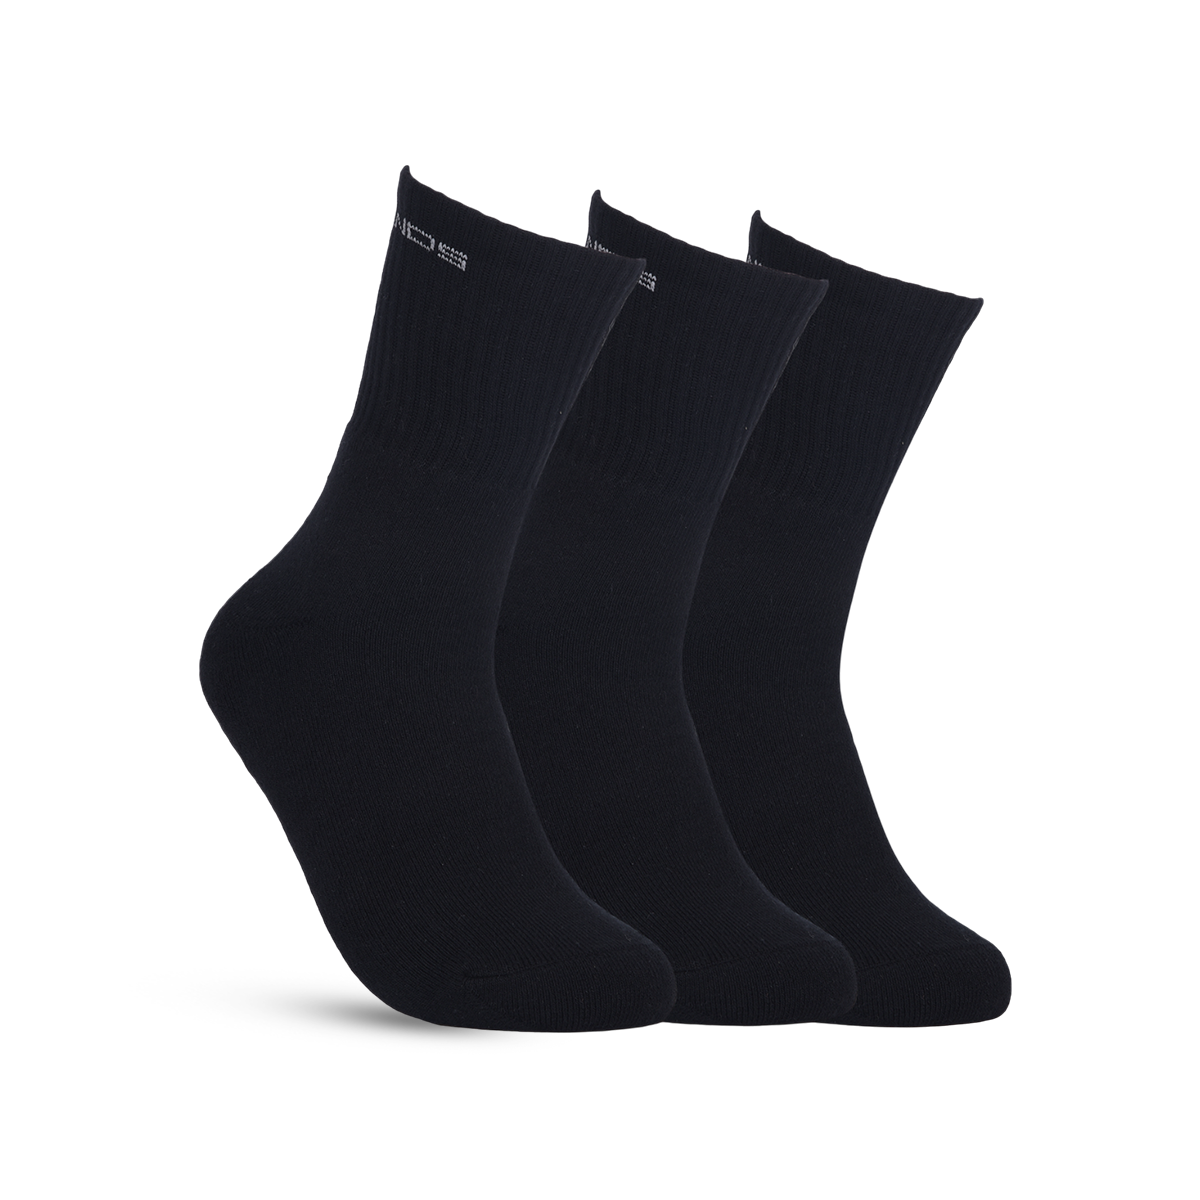 QUADRA Black Crew Socks (Pack of 3) for Everyday Comfort